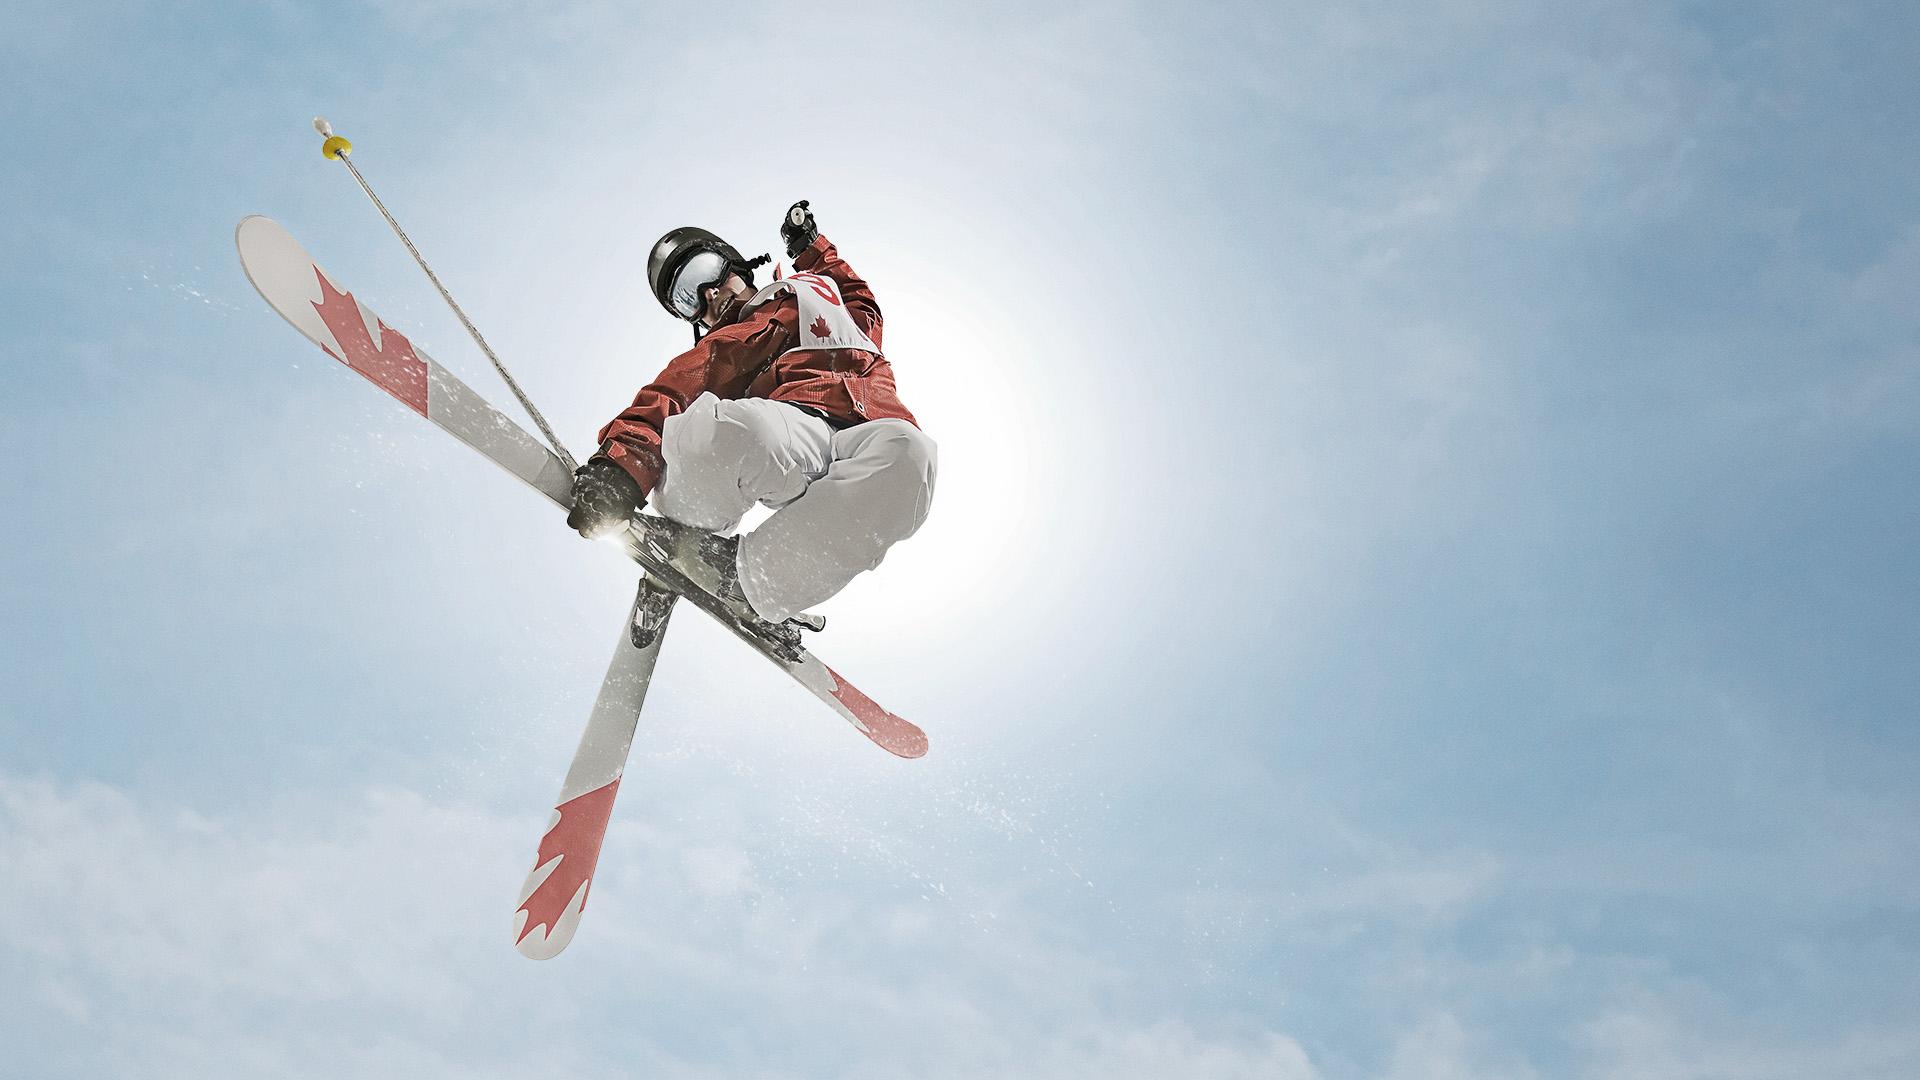 Skiing Wallpaper Image